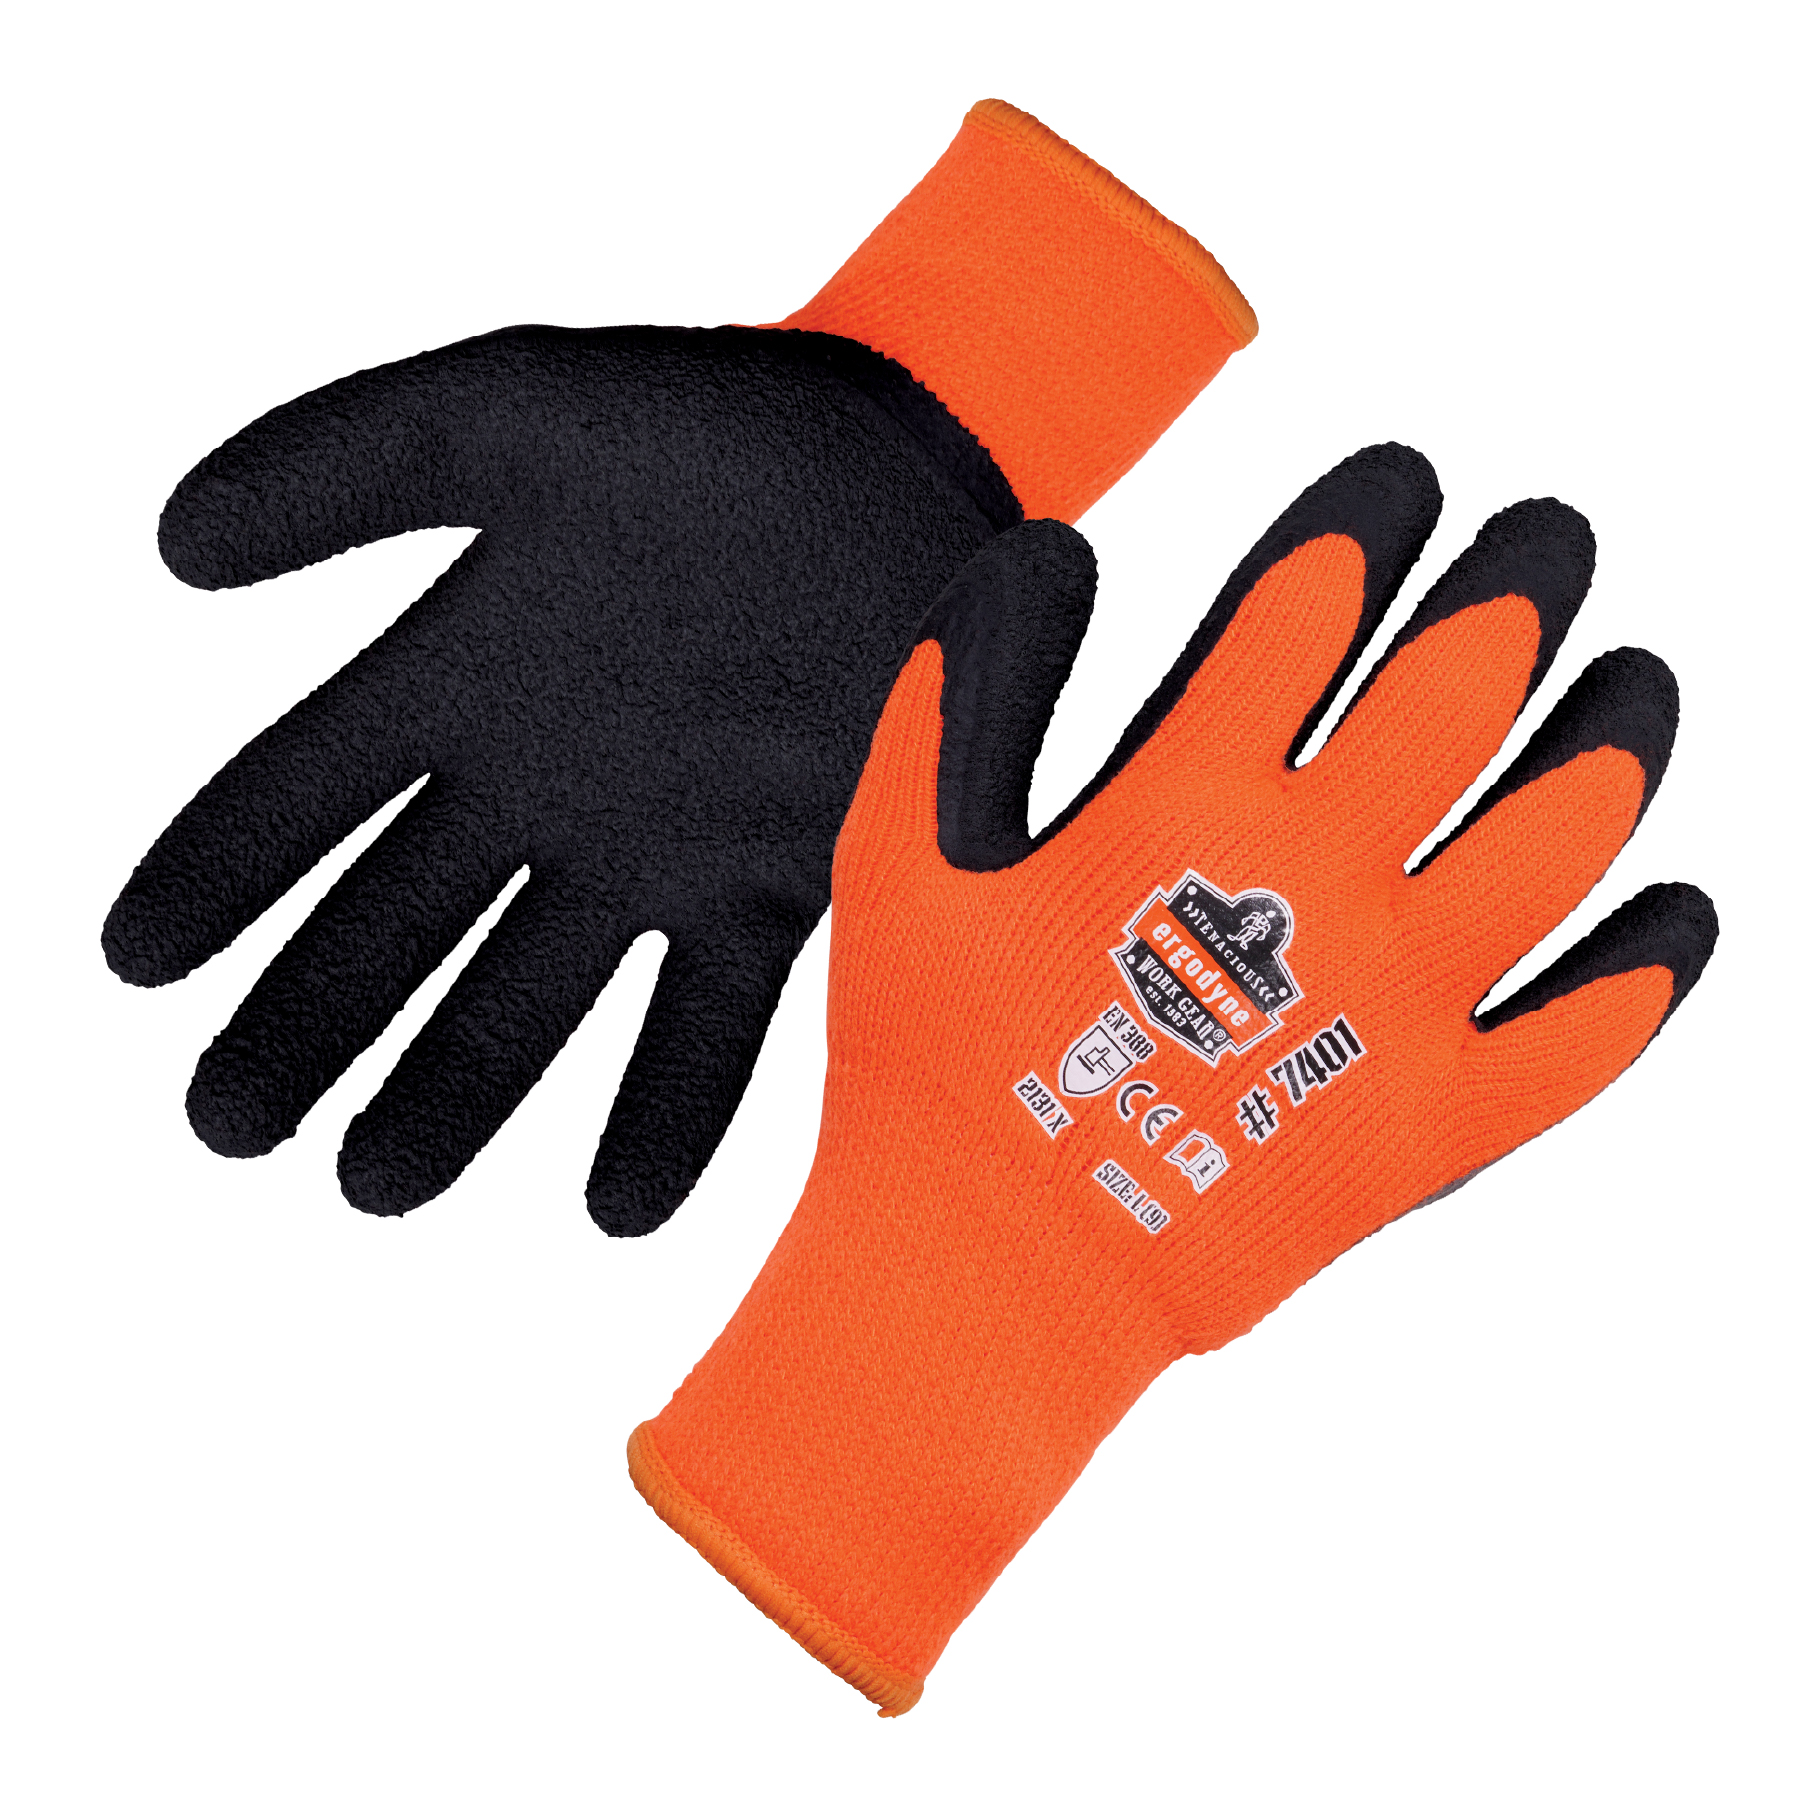 Portwest Fleece Winter Warm INSULATEX Lined Grip Gloves Black or Navy 